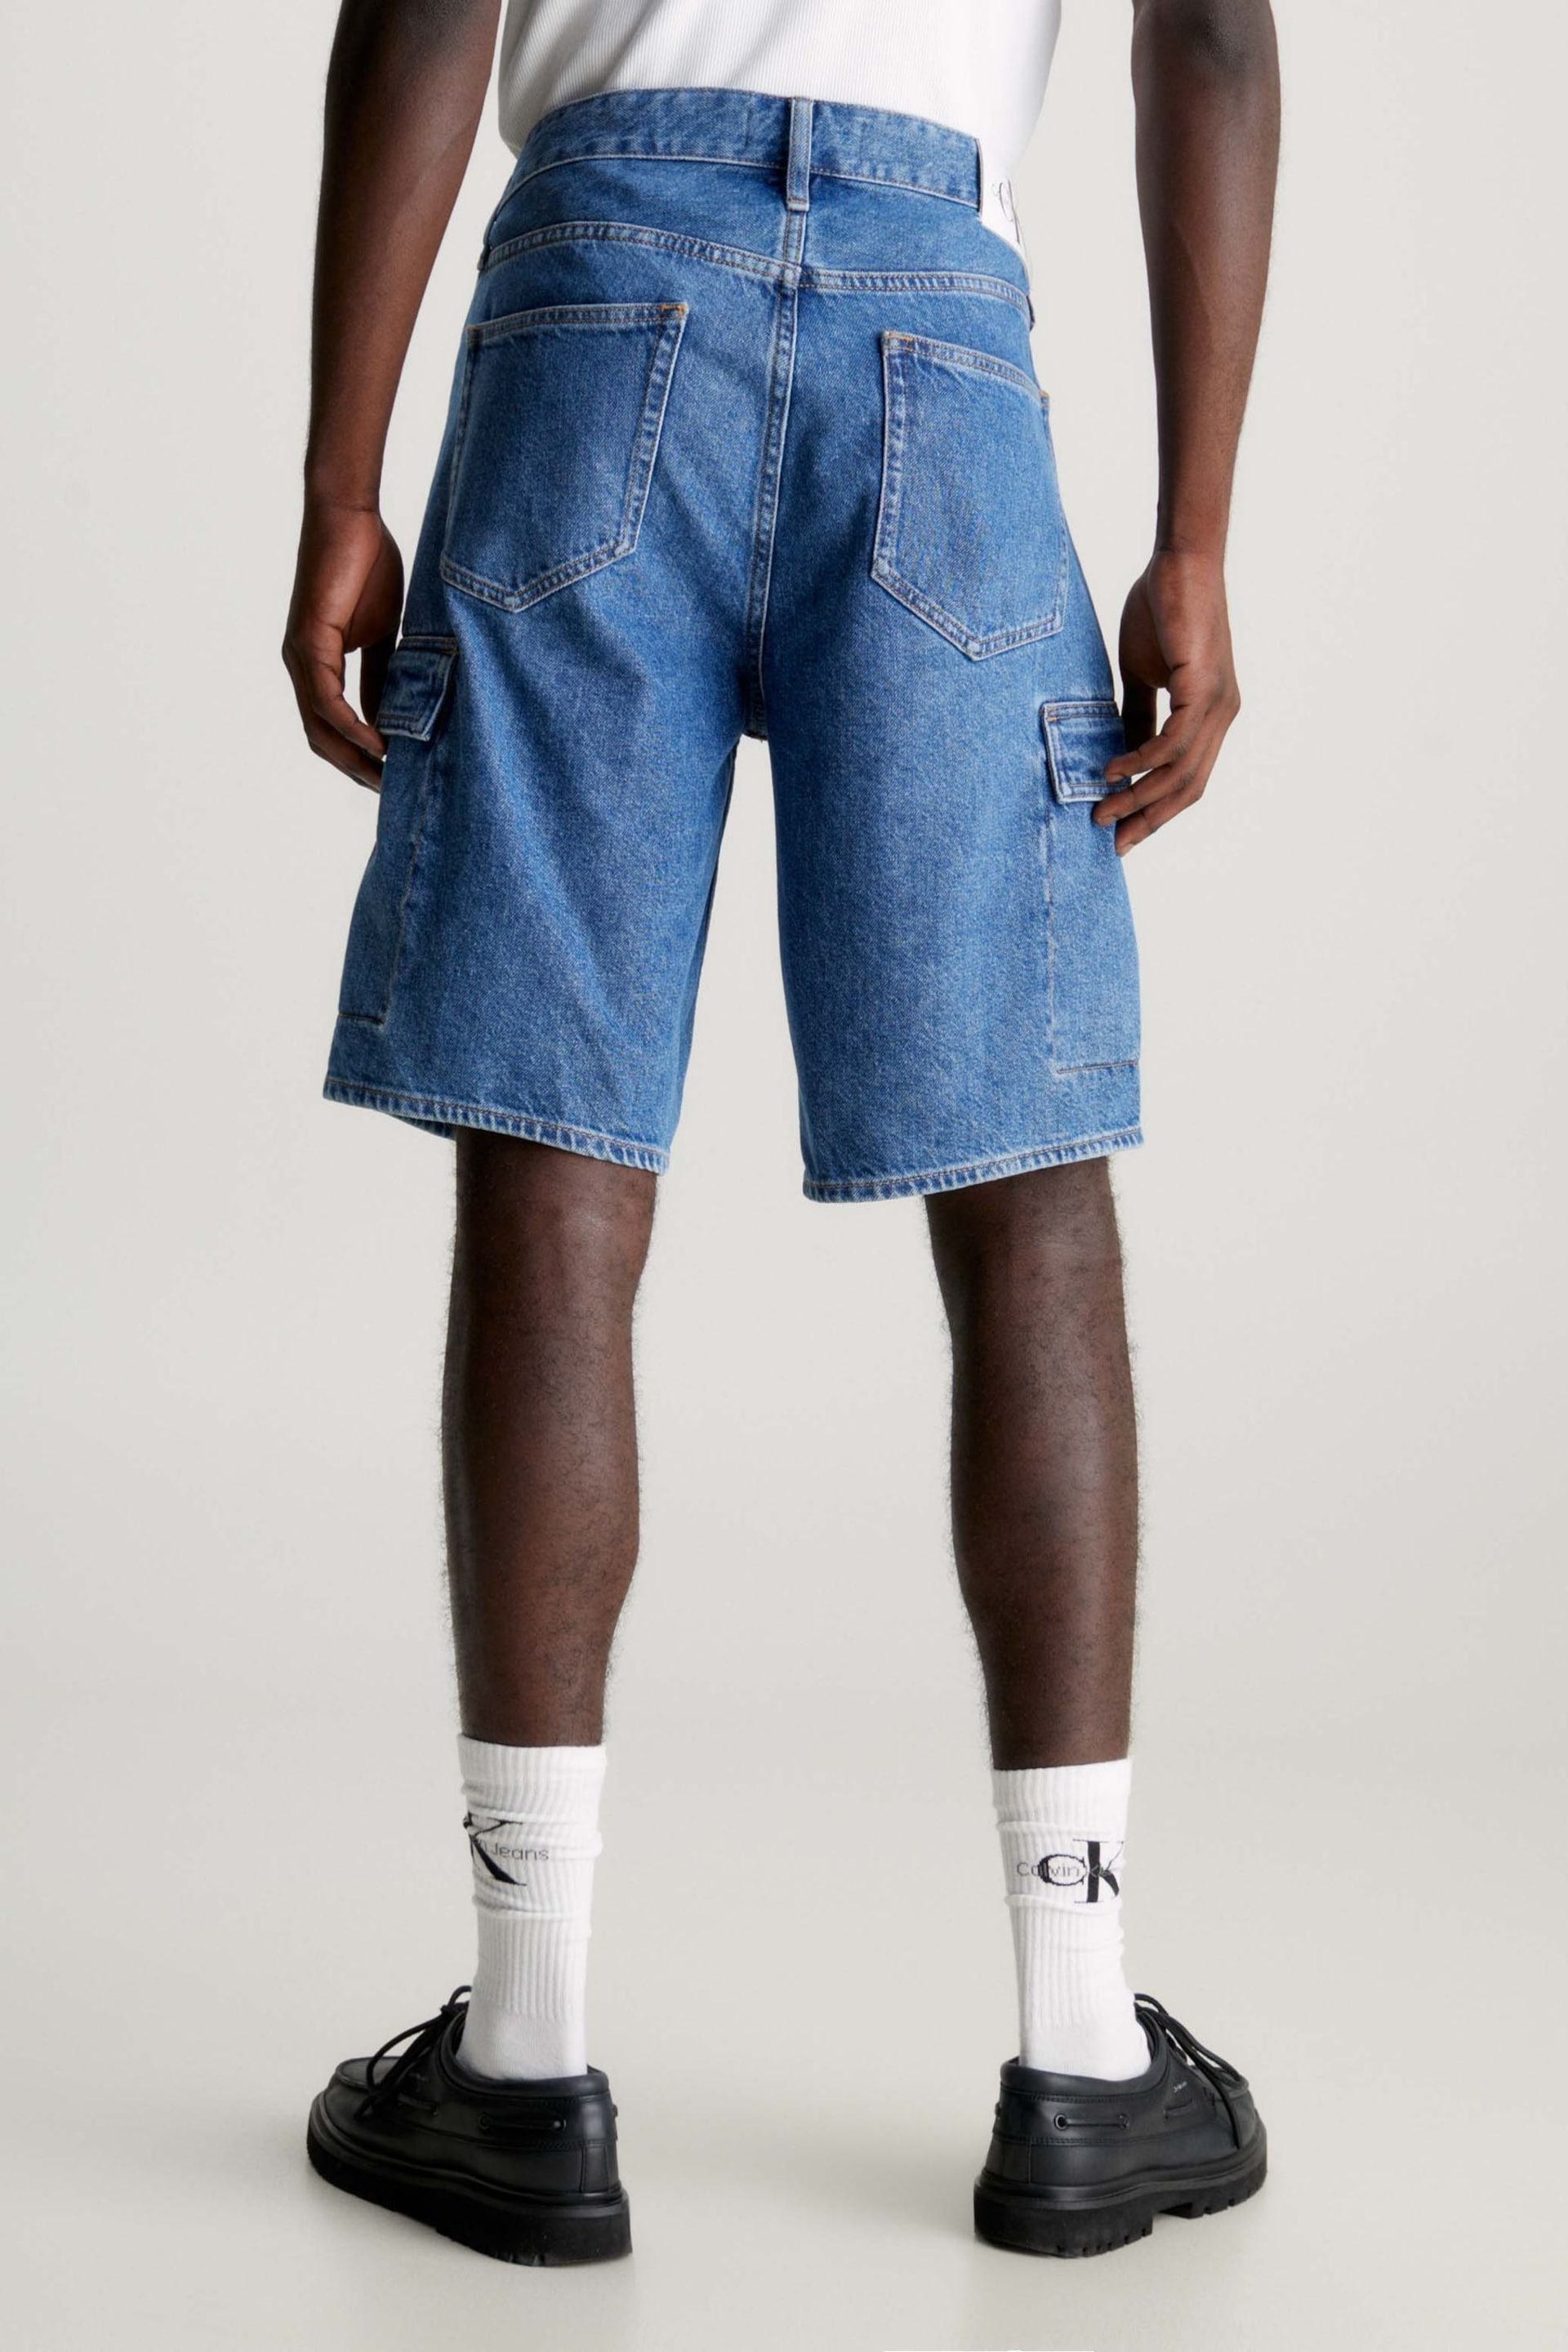 Calvin Klein Blue 90’s Loose Denim Cargo Shorts - Image 2 of 3